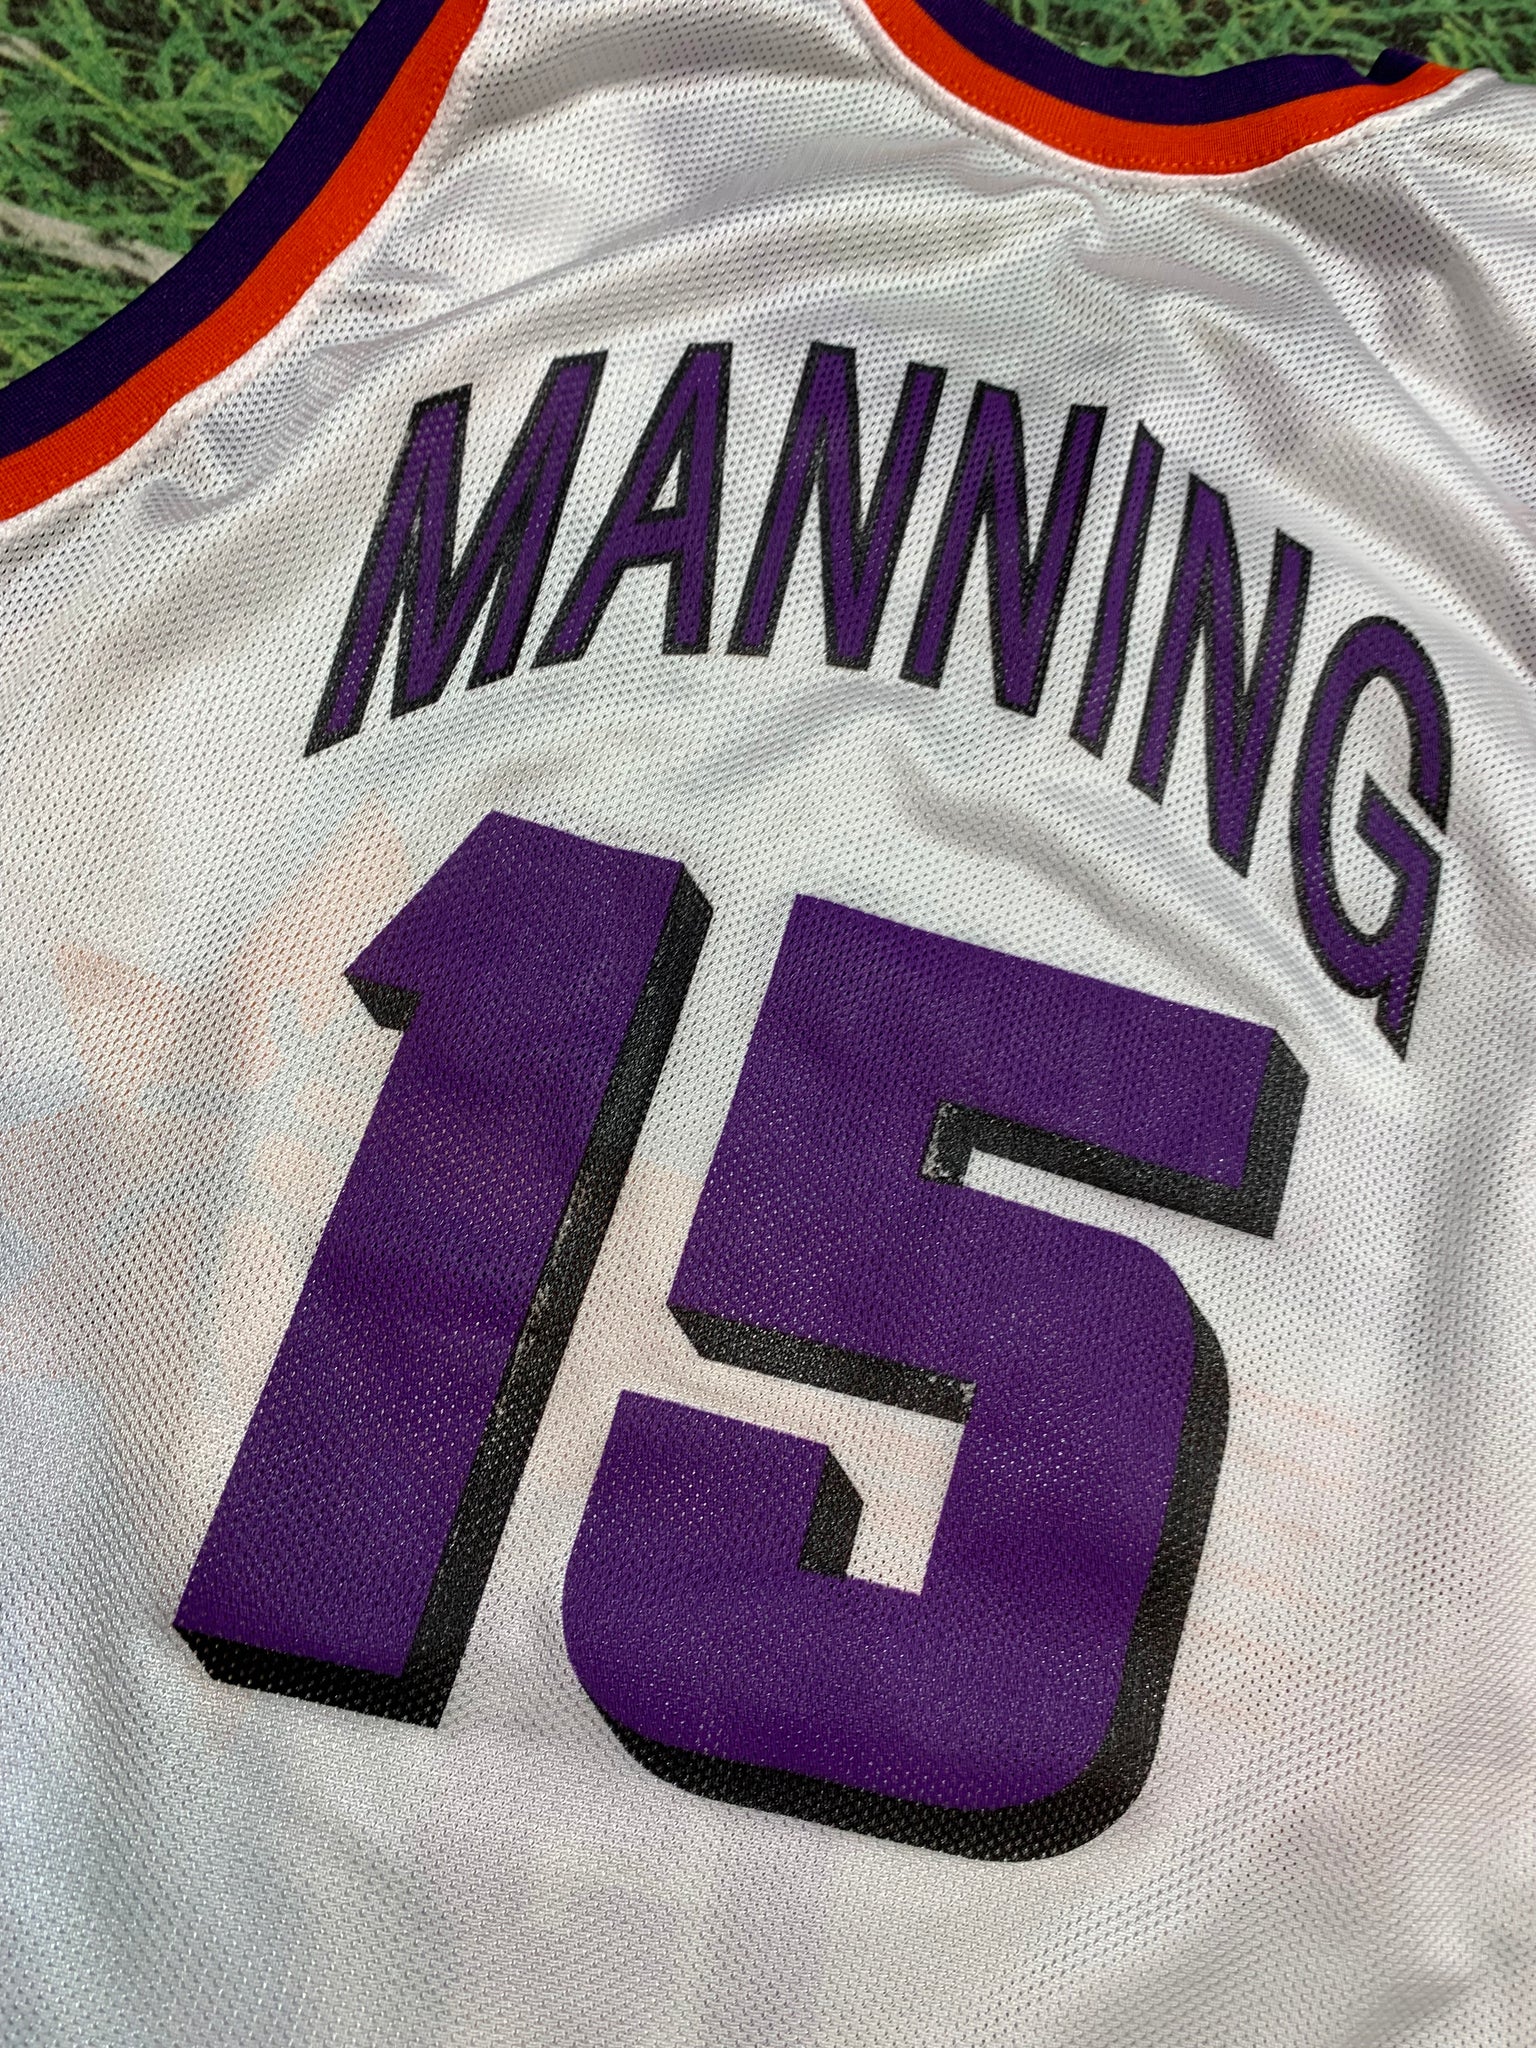 DANNY MANNING PHOENIX SUNS Champion Jersey NBA PURPLE MEN 44 LARGE